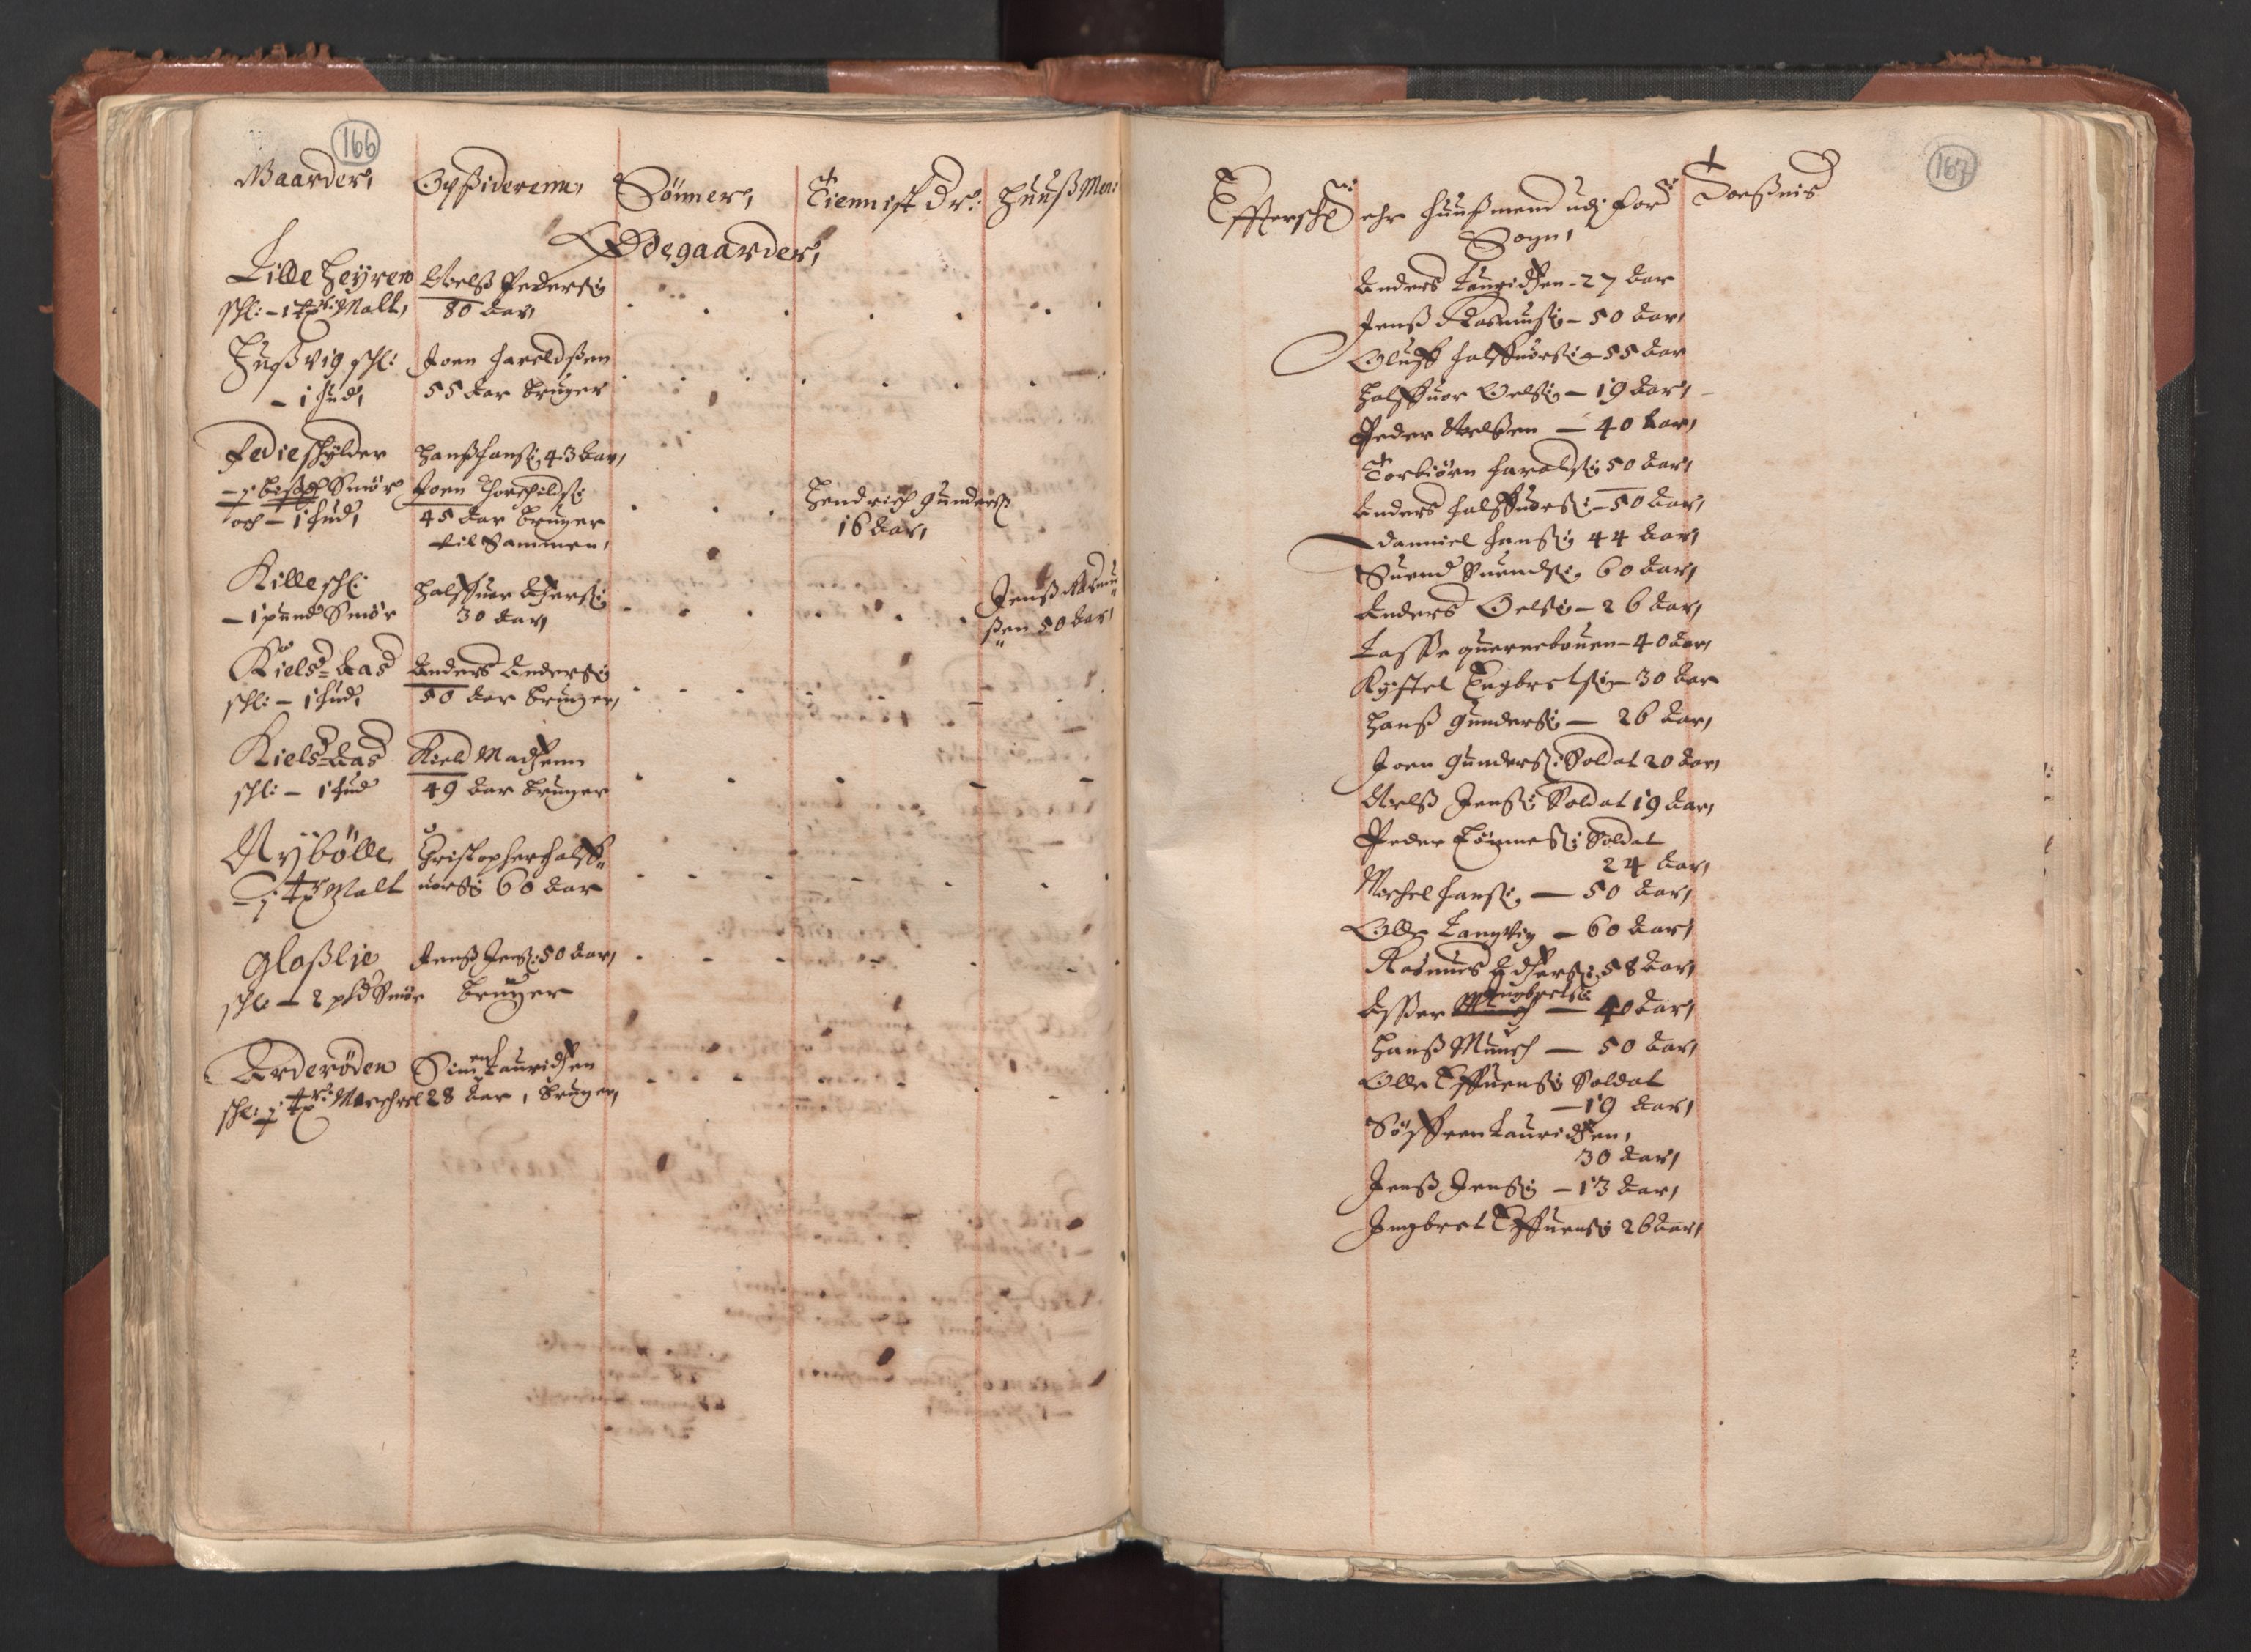 RA, Fogdenes og sorenskrivernes manntall 1664-1666, nr. 1: Fogderier (len og skipreider) i nåværende Østfold fylke, 1664, s. 166-167